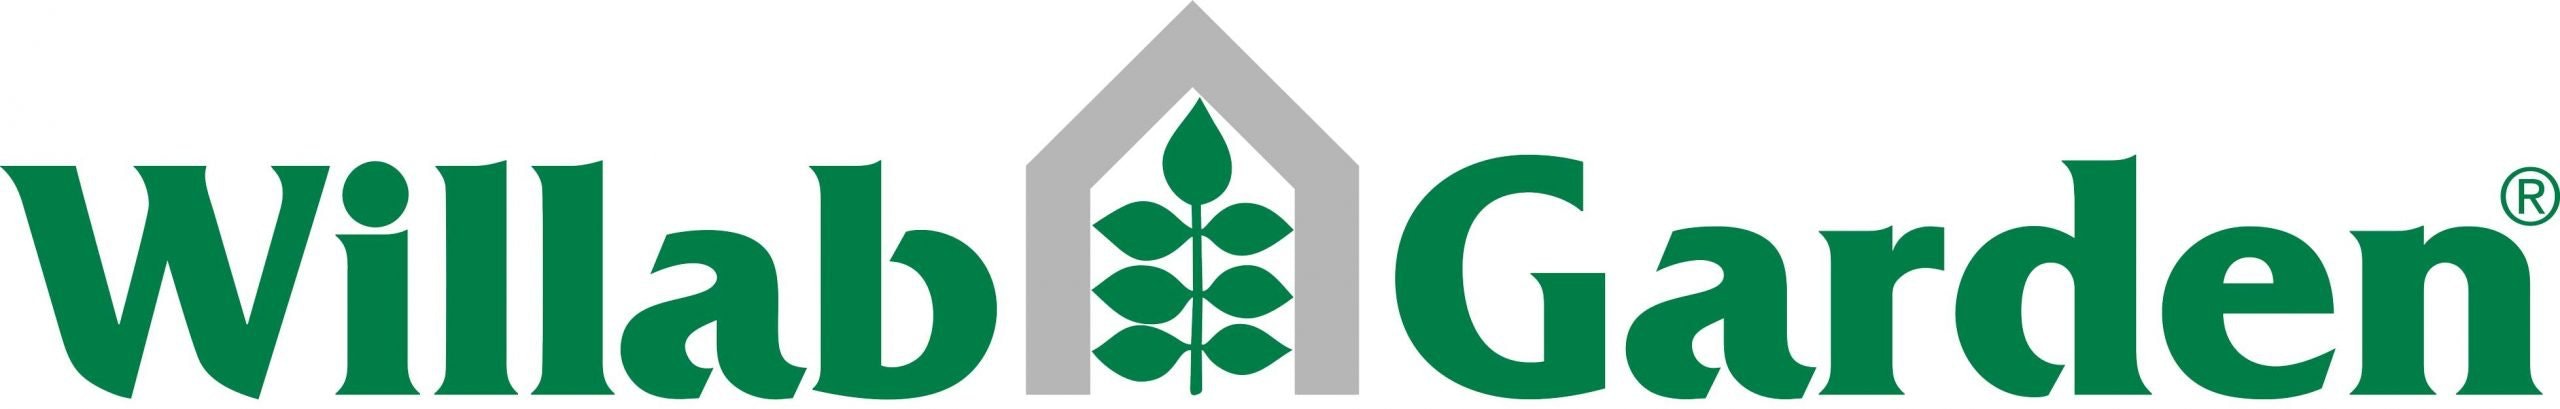 Willab Garden logo